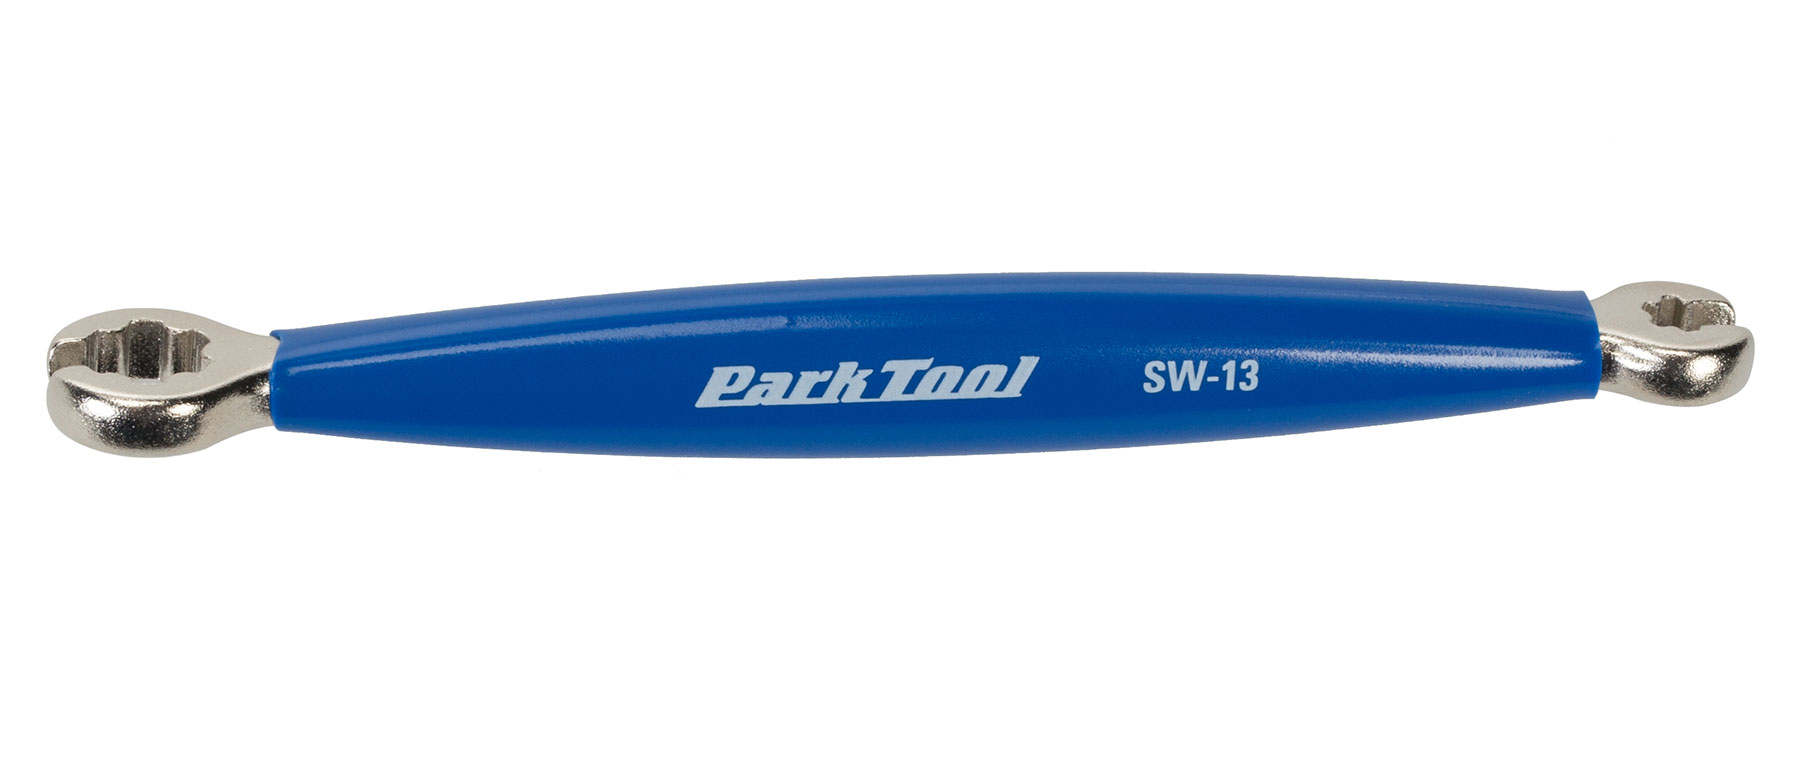 Park Tool SW-13 Spoke Wrench for Mavic Wheels